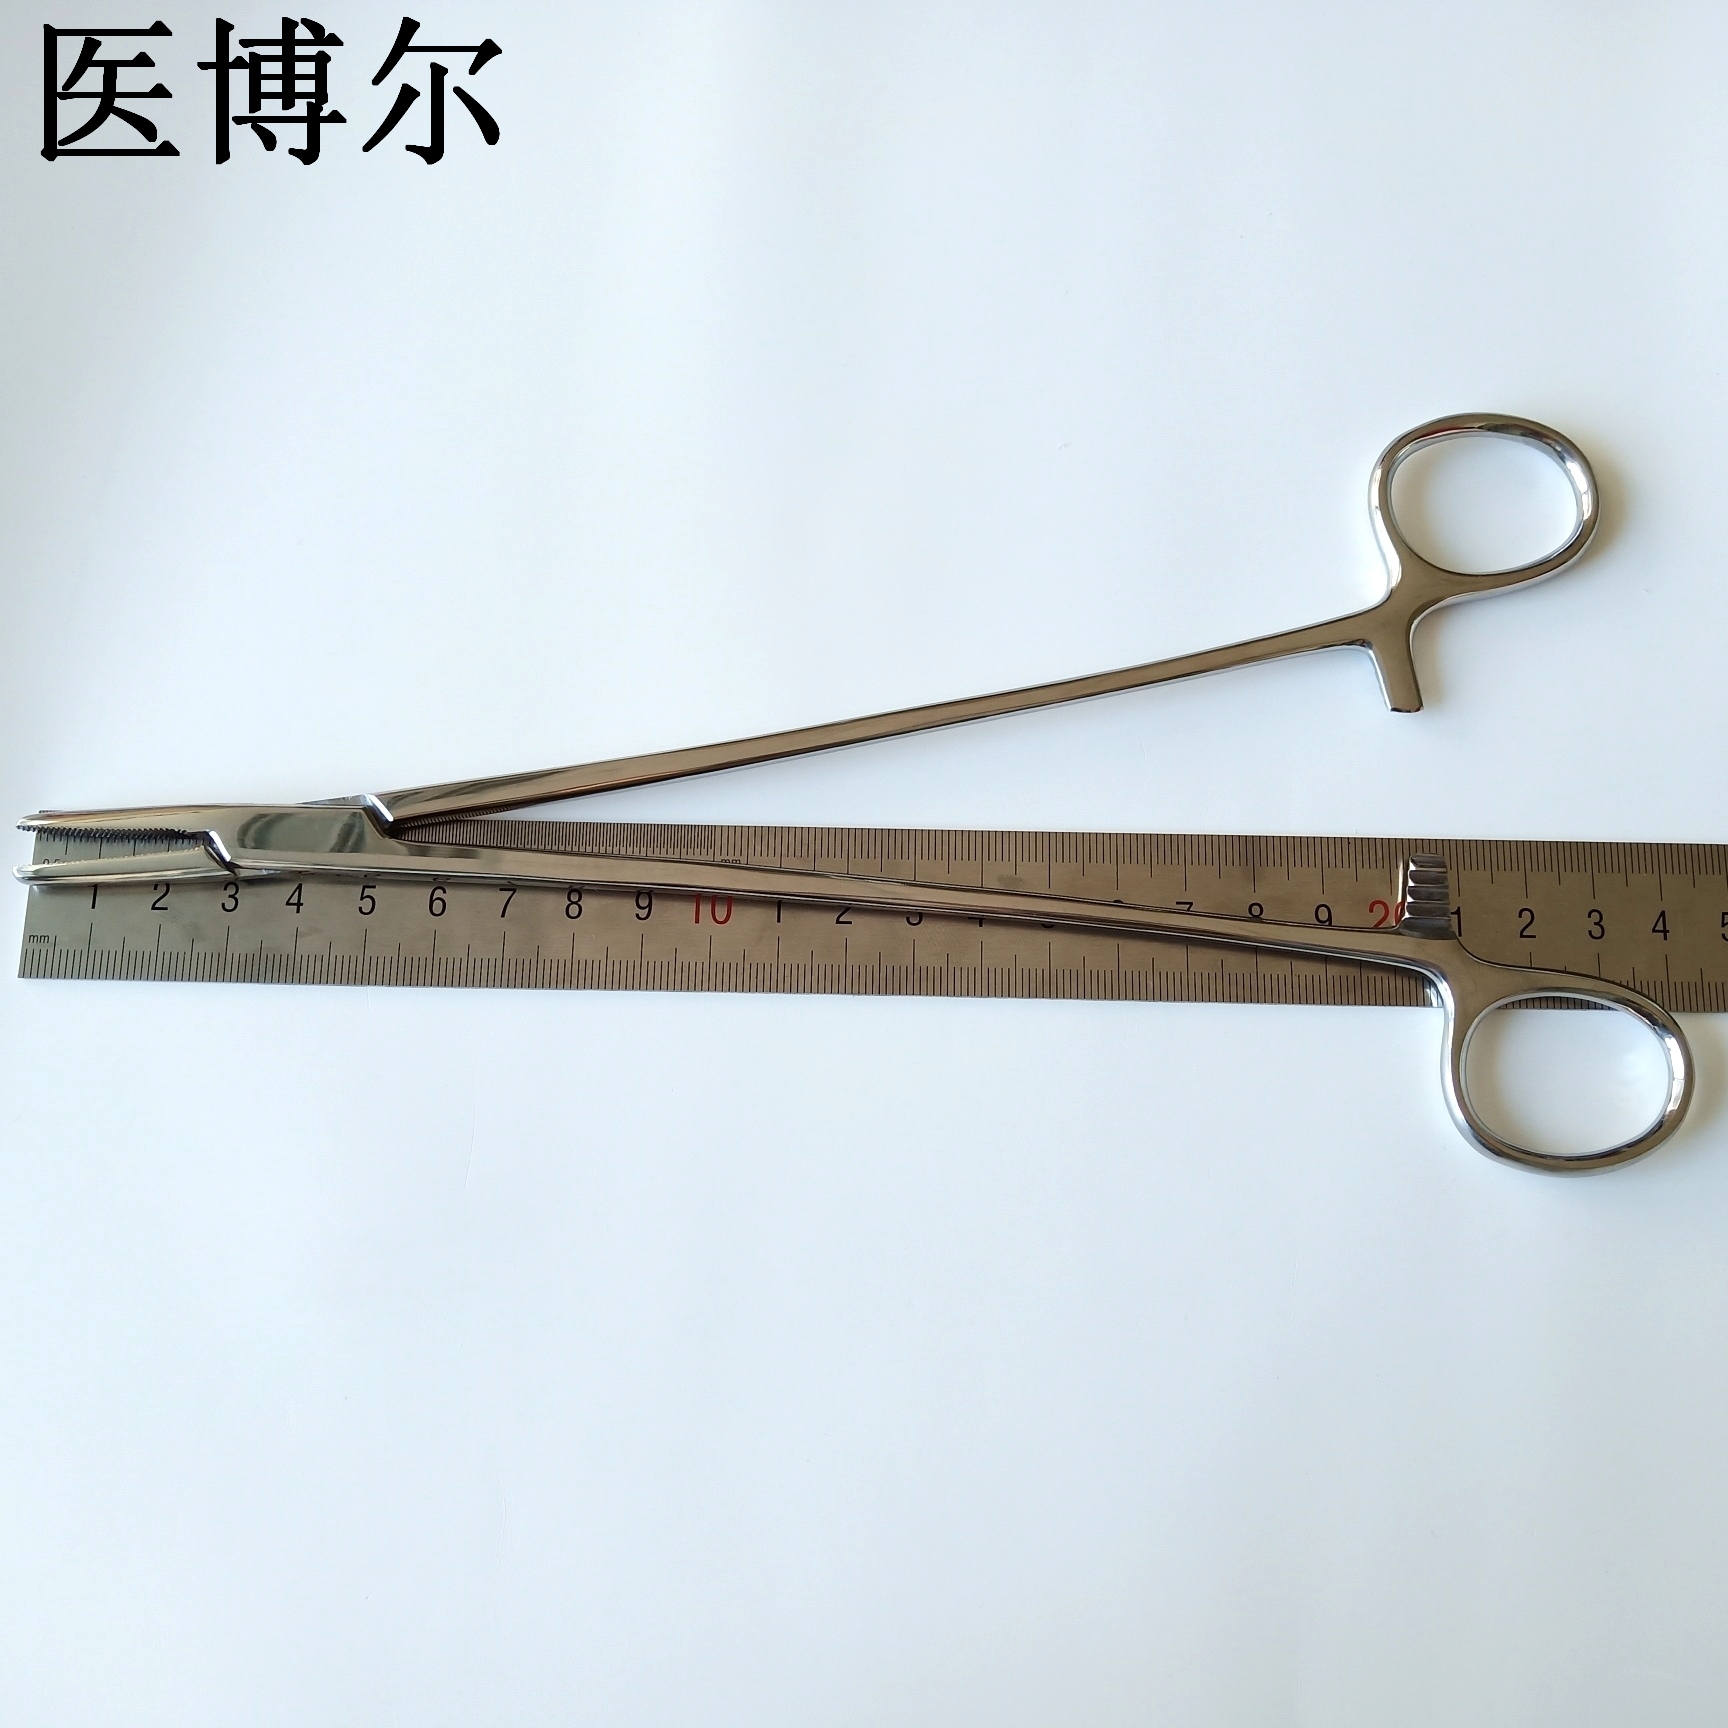 24cm持针器 (9)_看图王.jpg